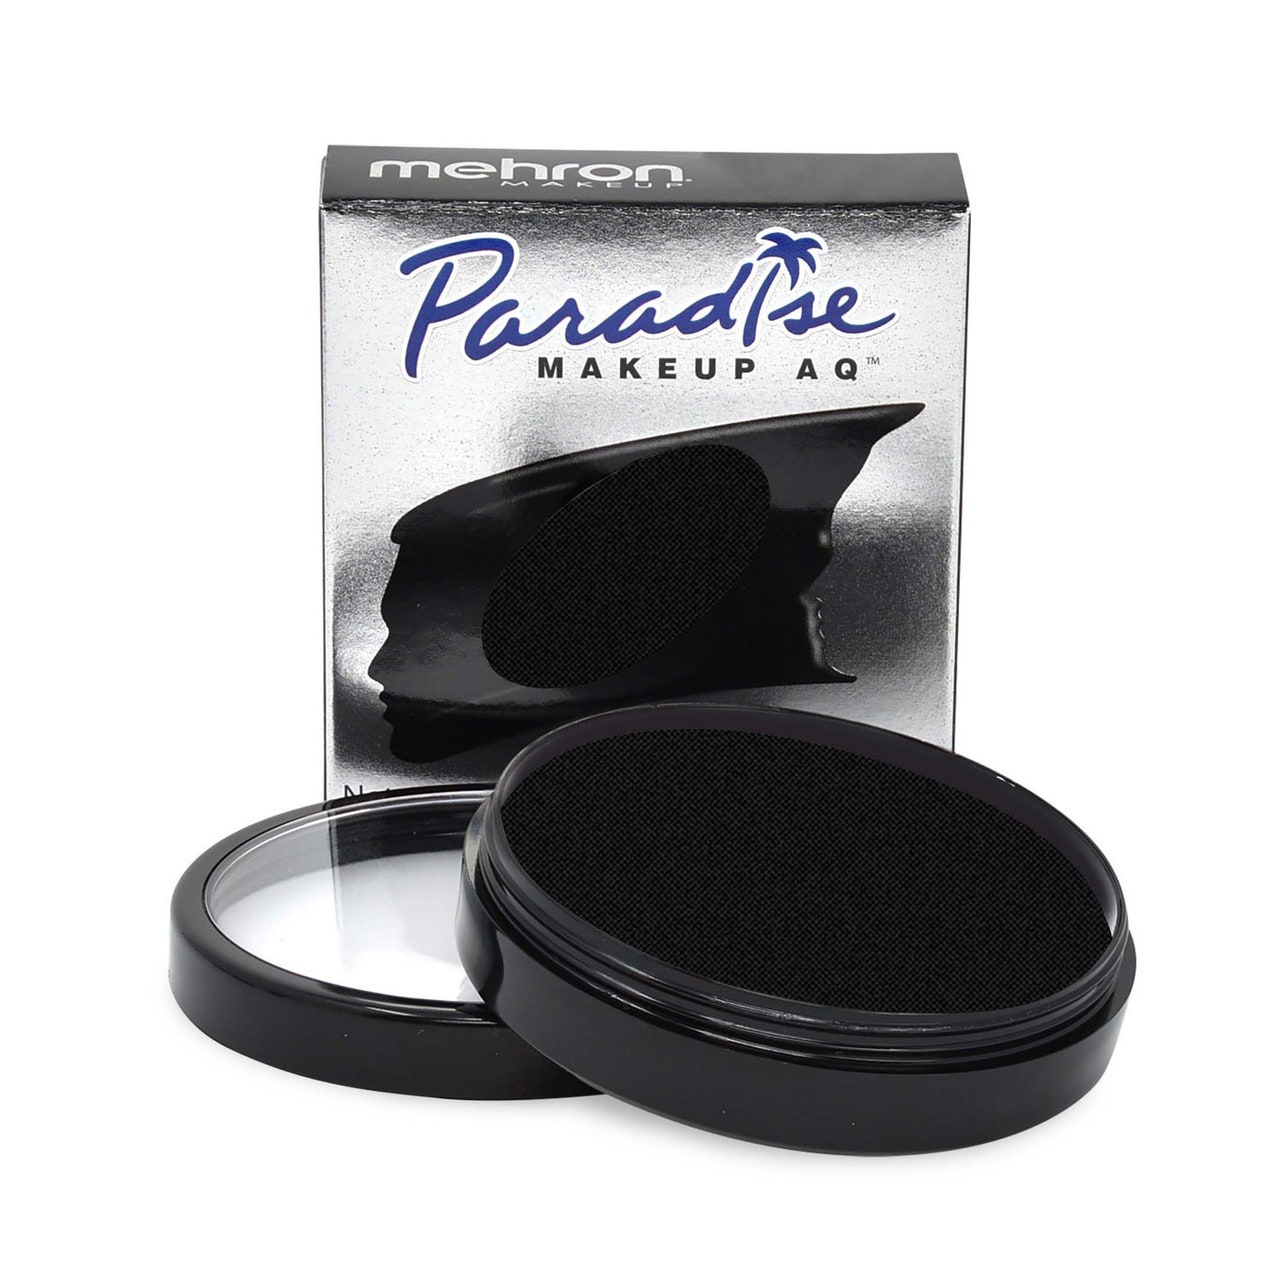 Mehron Paradise Makeup AQ mit kompakter offener Umverpackung